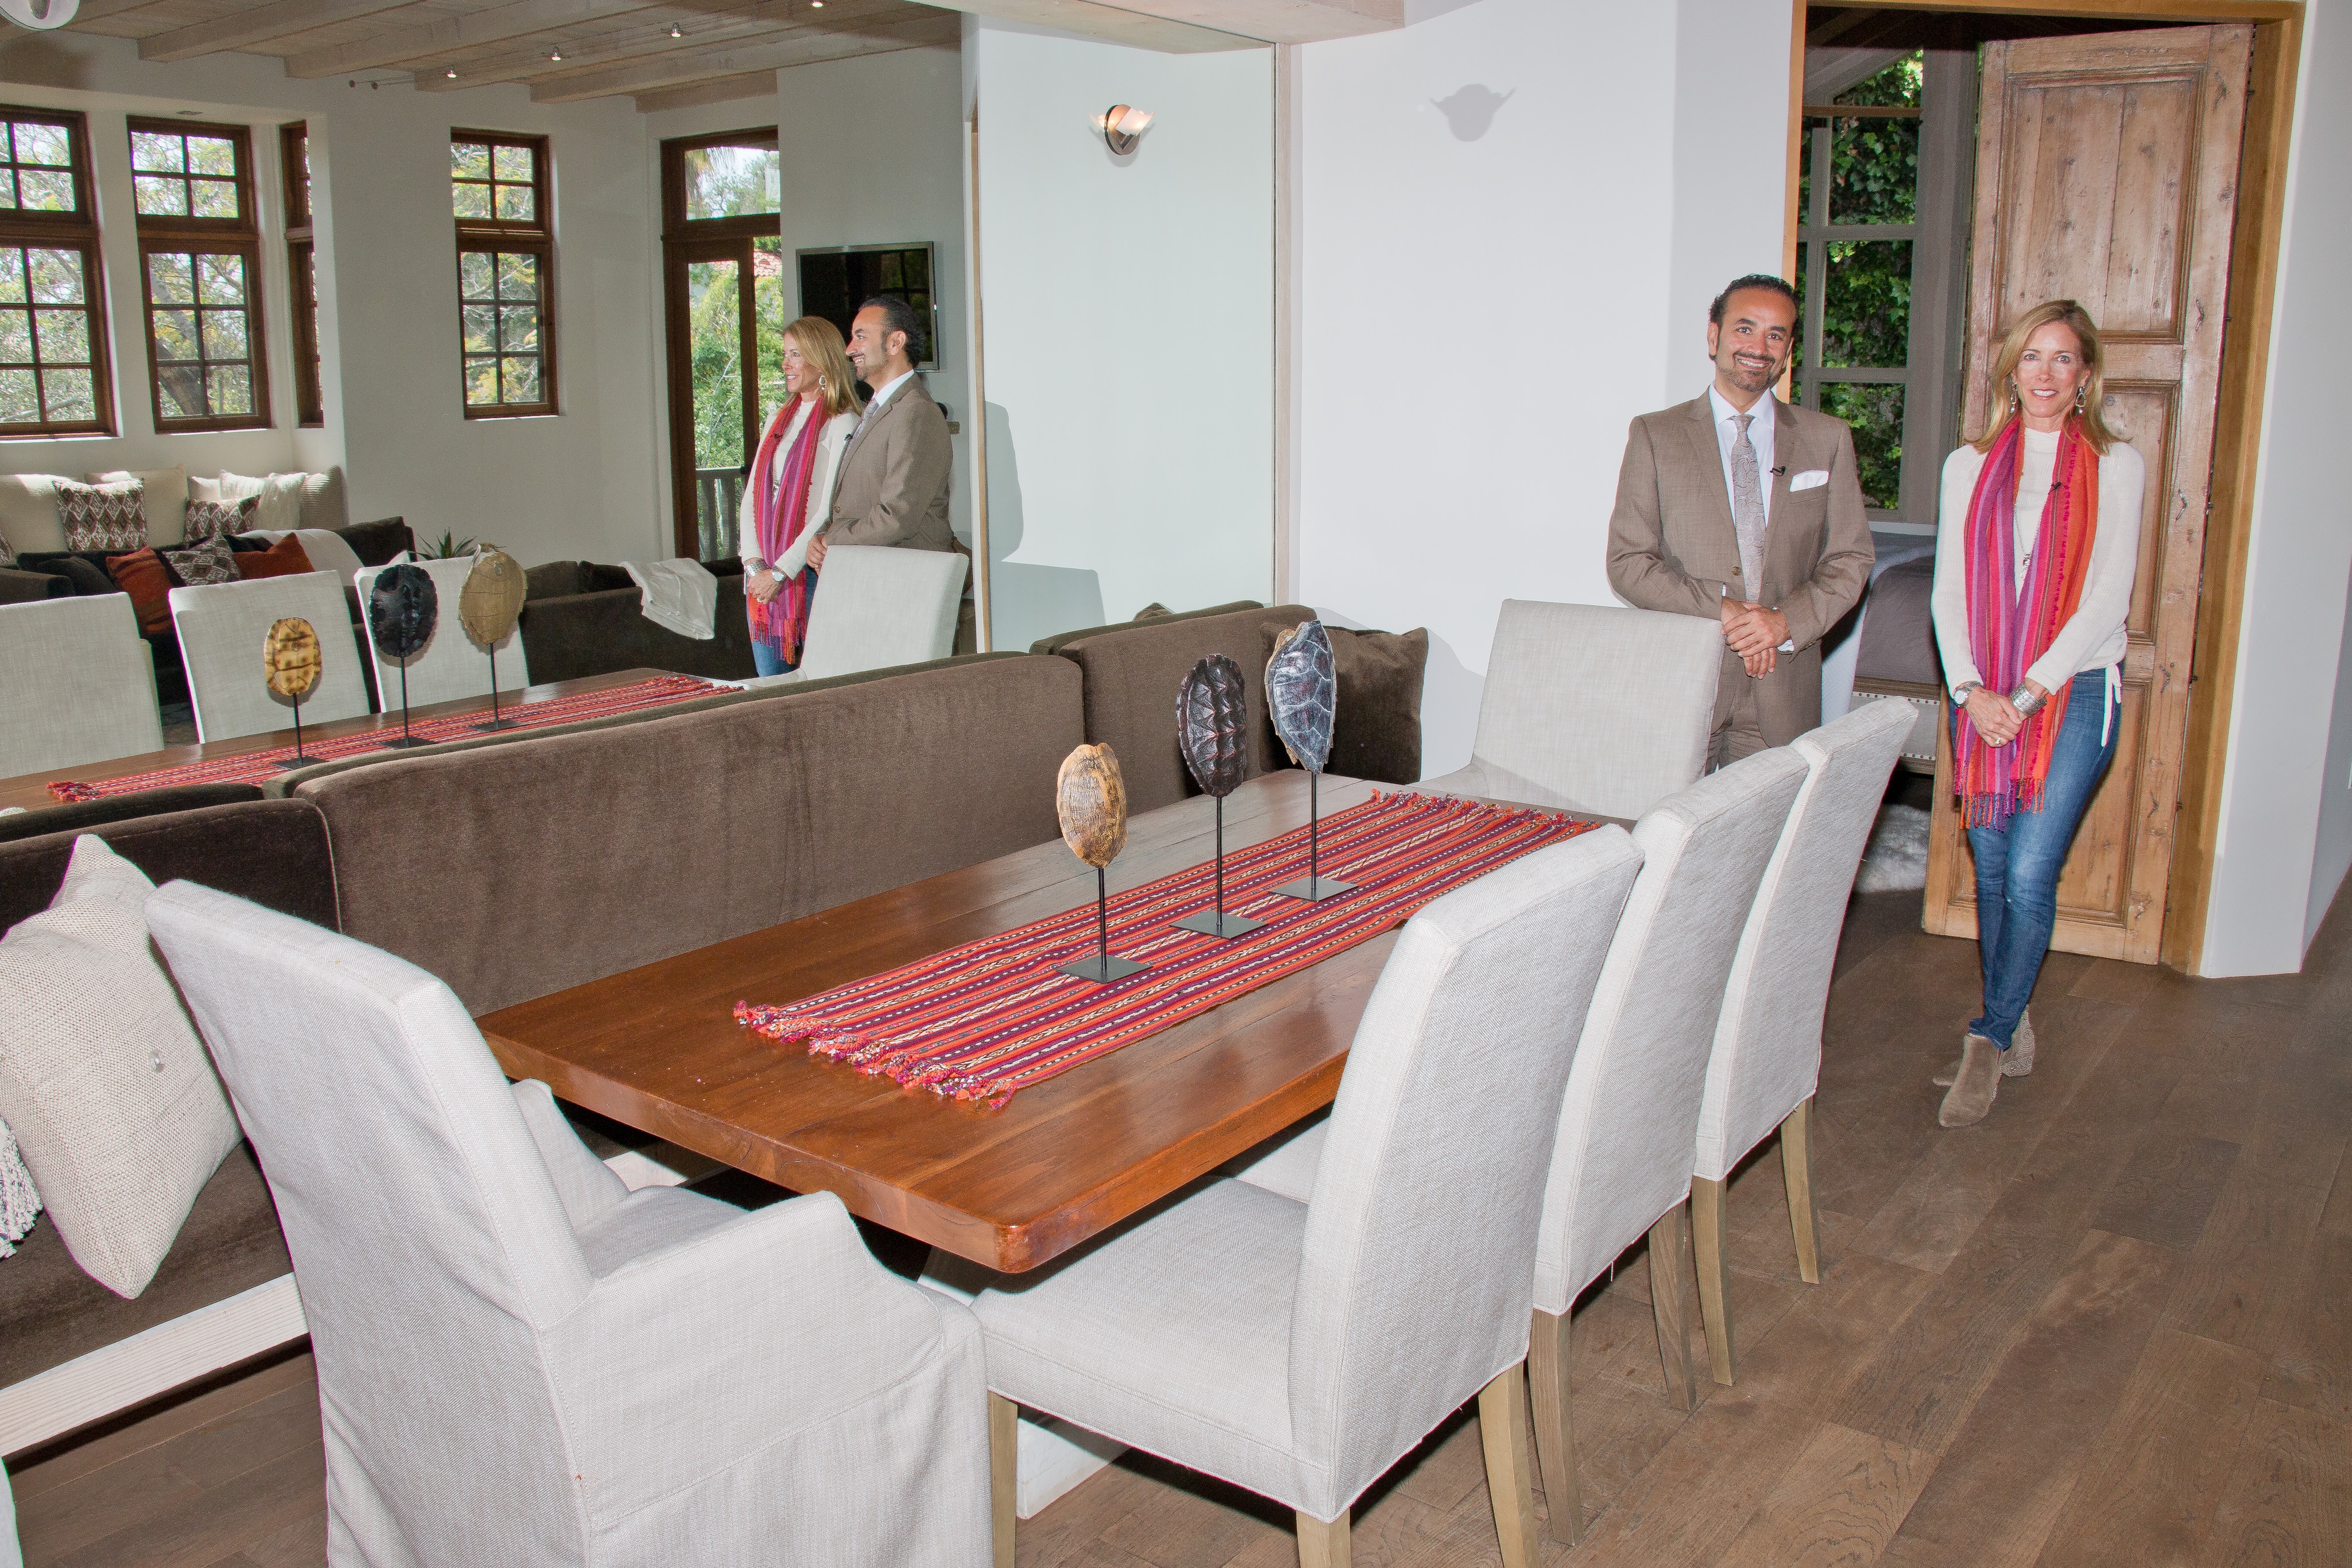 Design-Santa-Barbara-michael-kourosh-interior-designers-dining-table